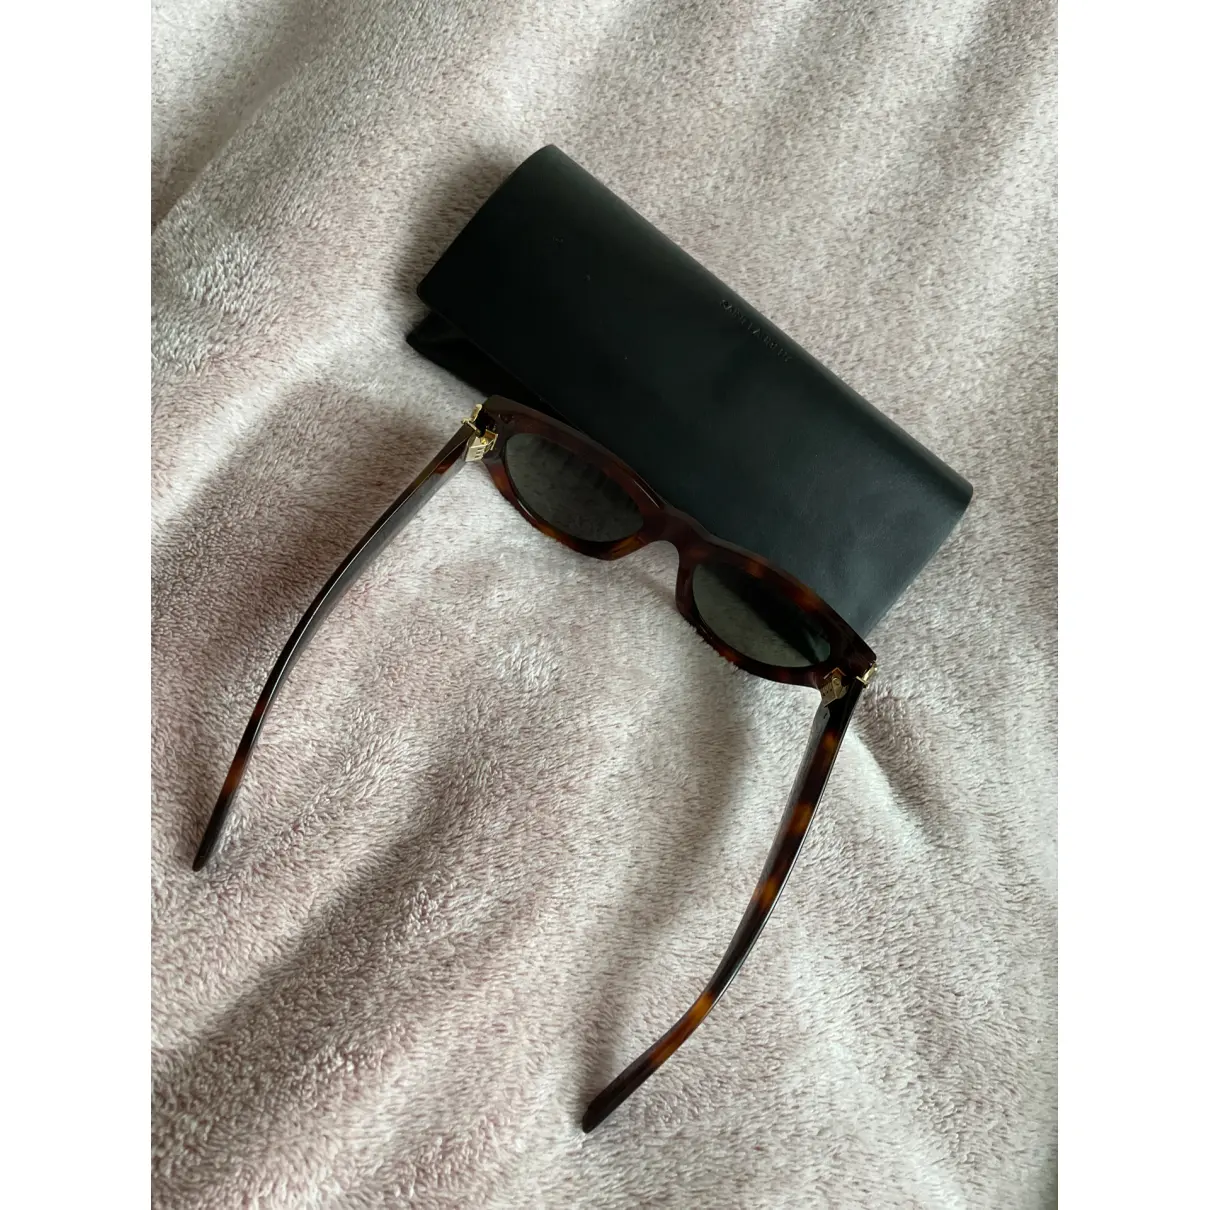 Luxury Yves Saint Laurent Sunglasses Women